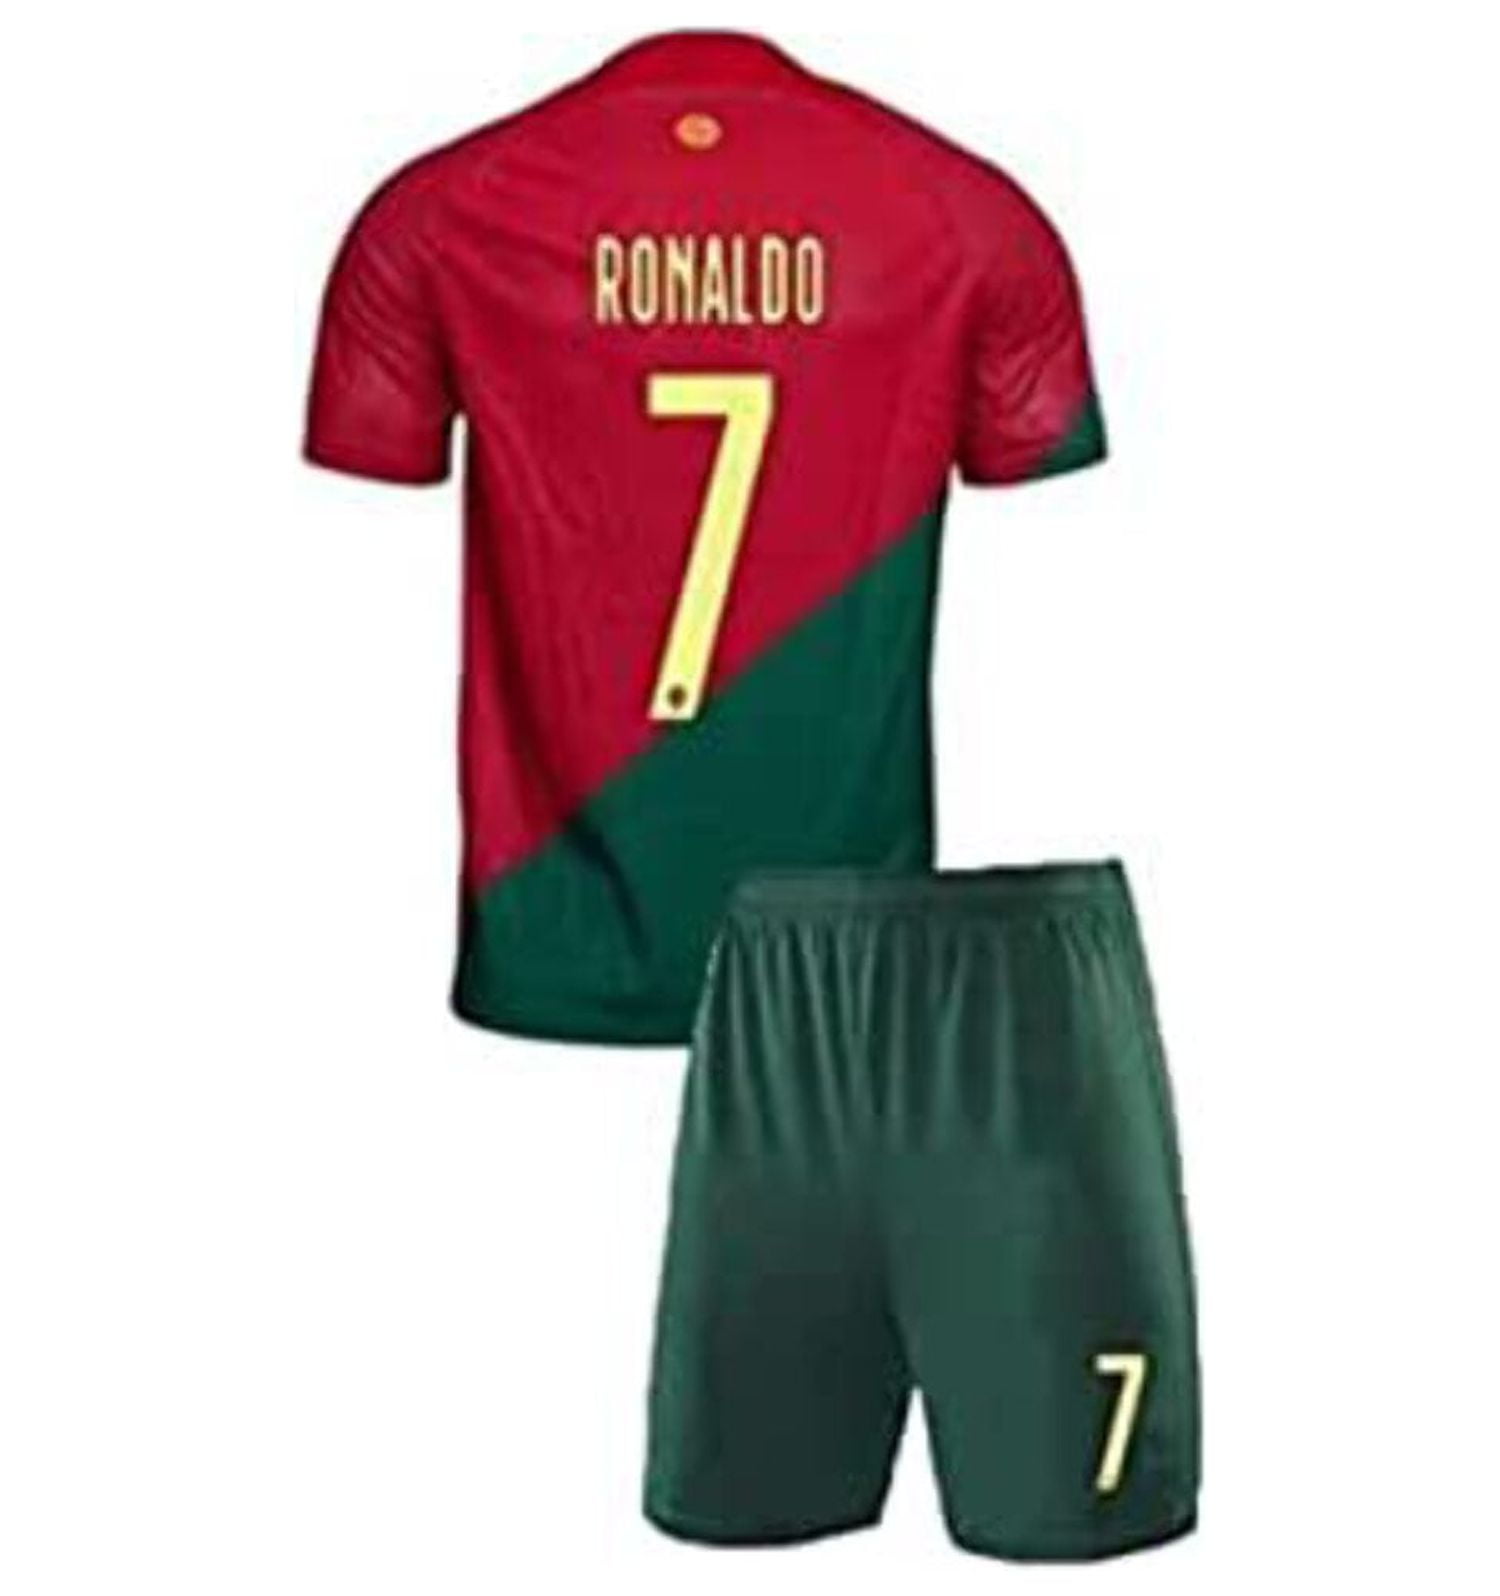 ronaldo jersey 7